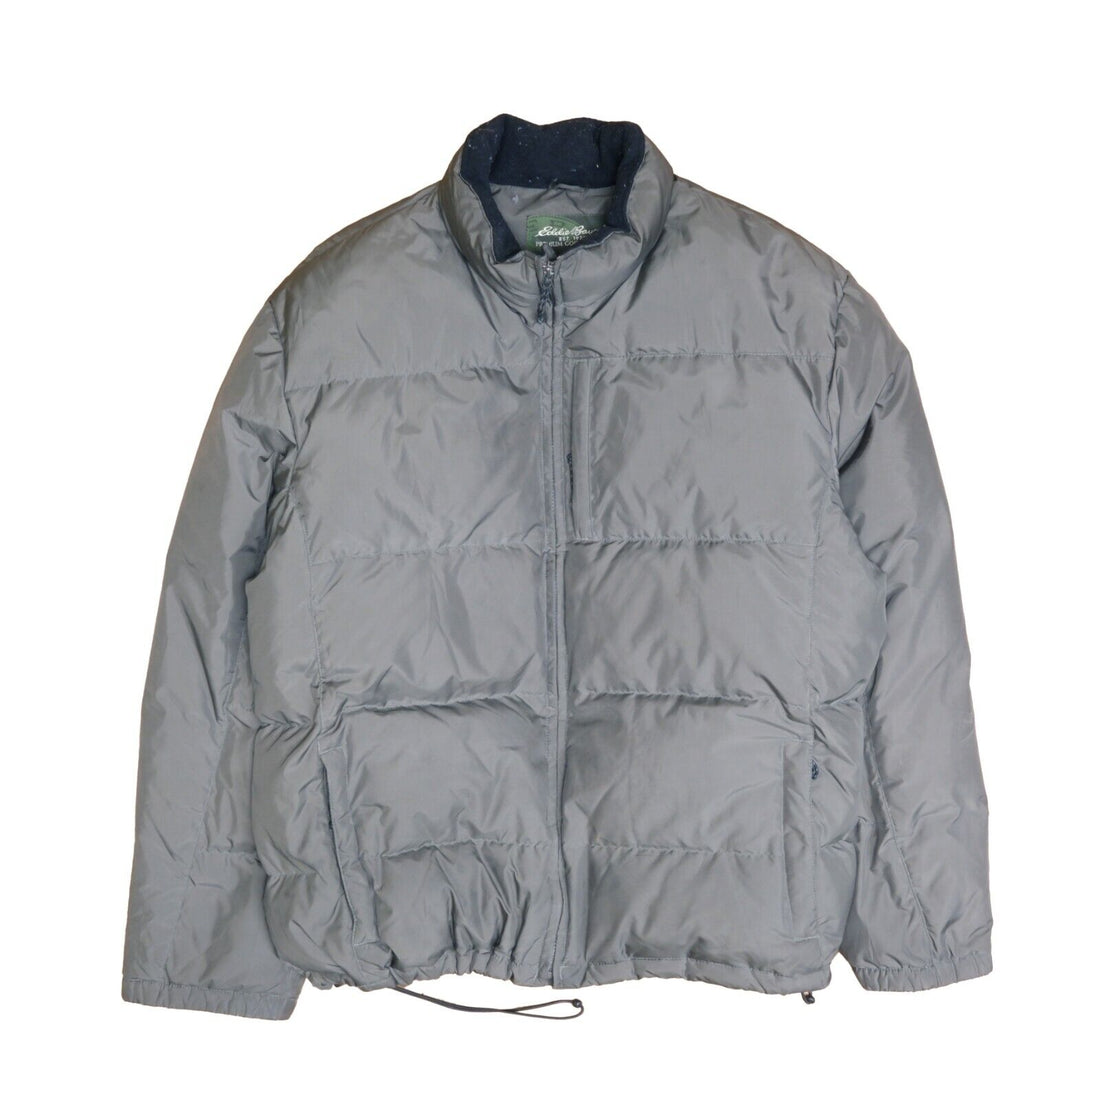 Eddie Bauer Puffer Jacket Size 2XL Green Goose Down Insulated